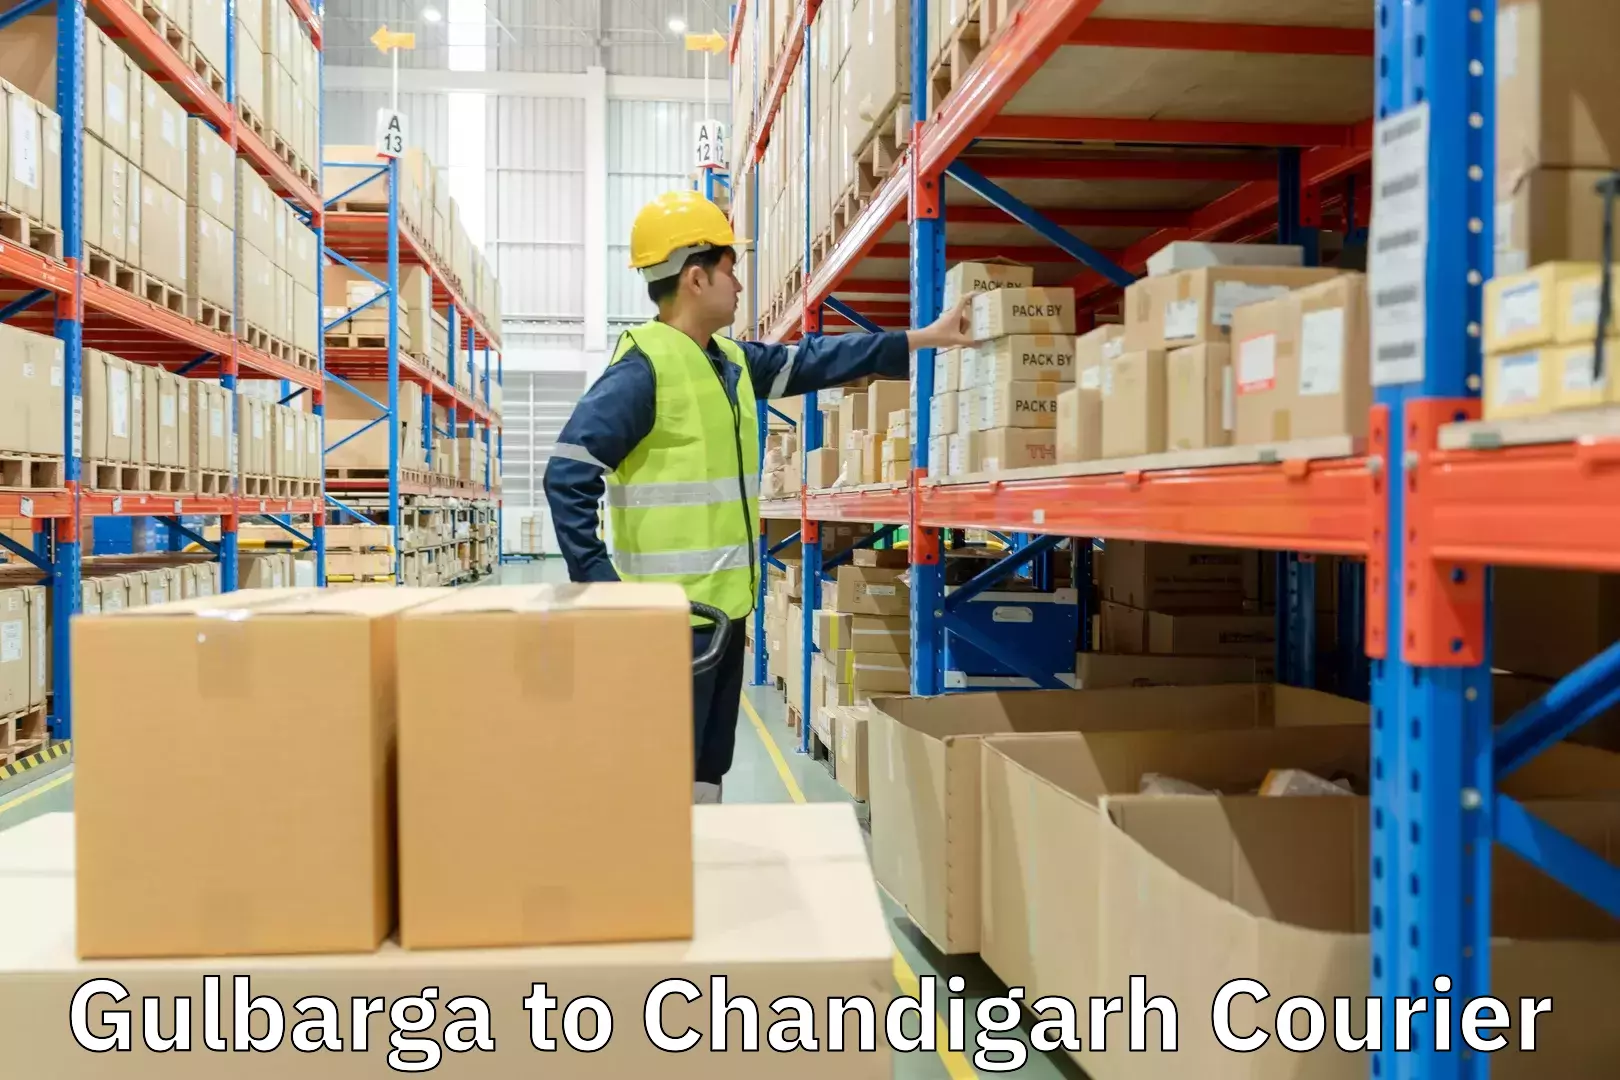 Customer-focused courier Gulbarga to Chandigarh